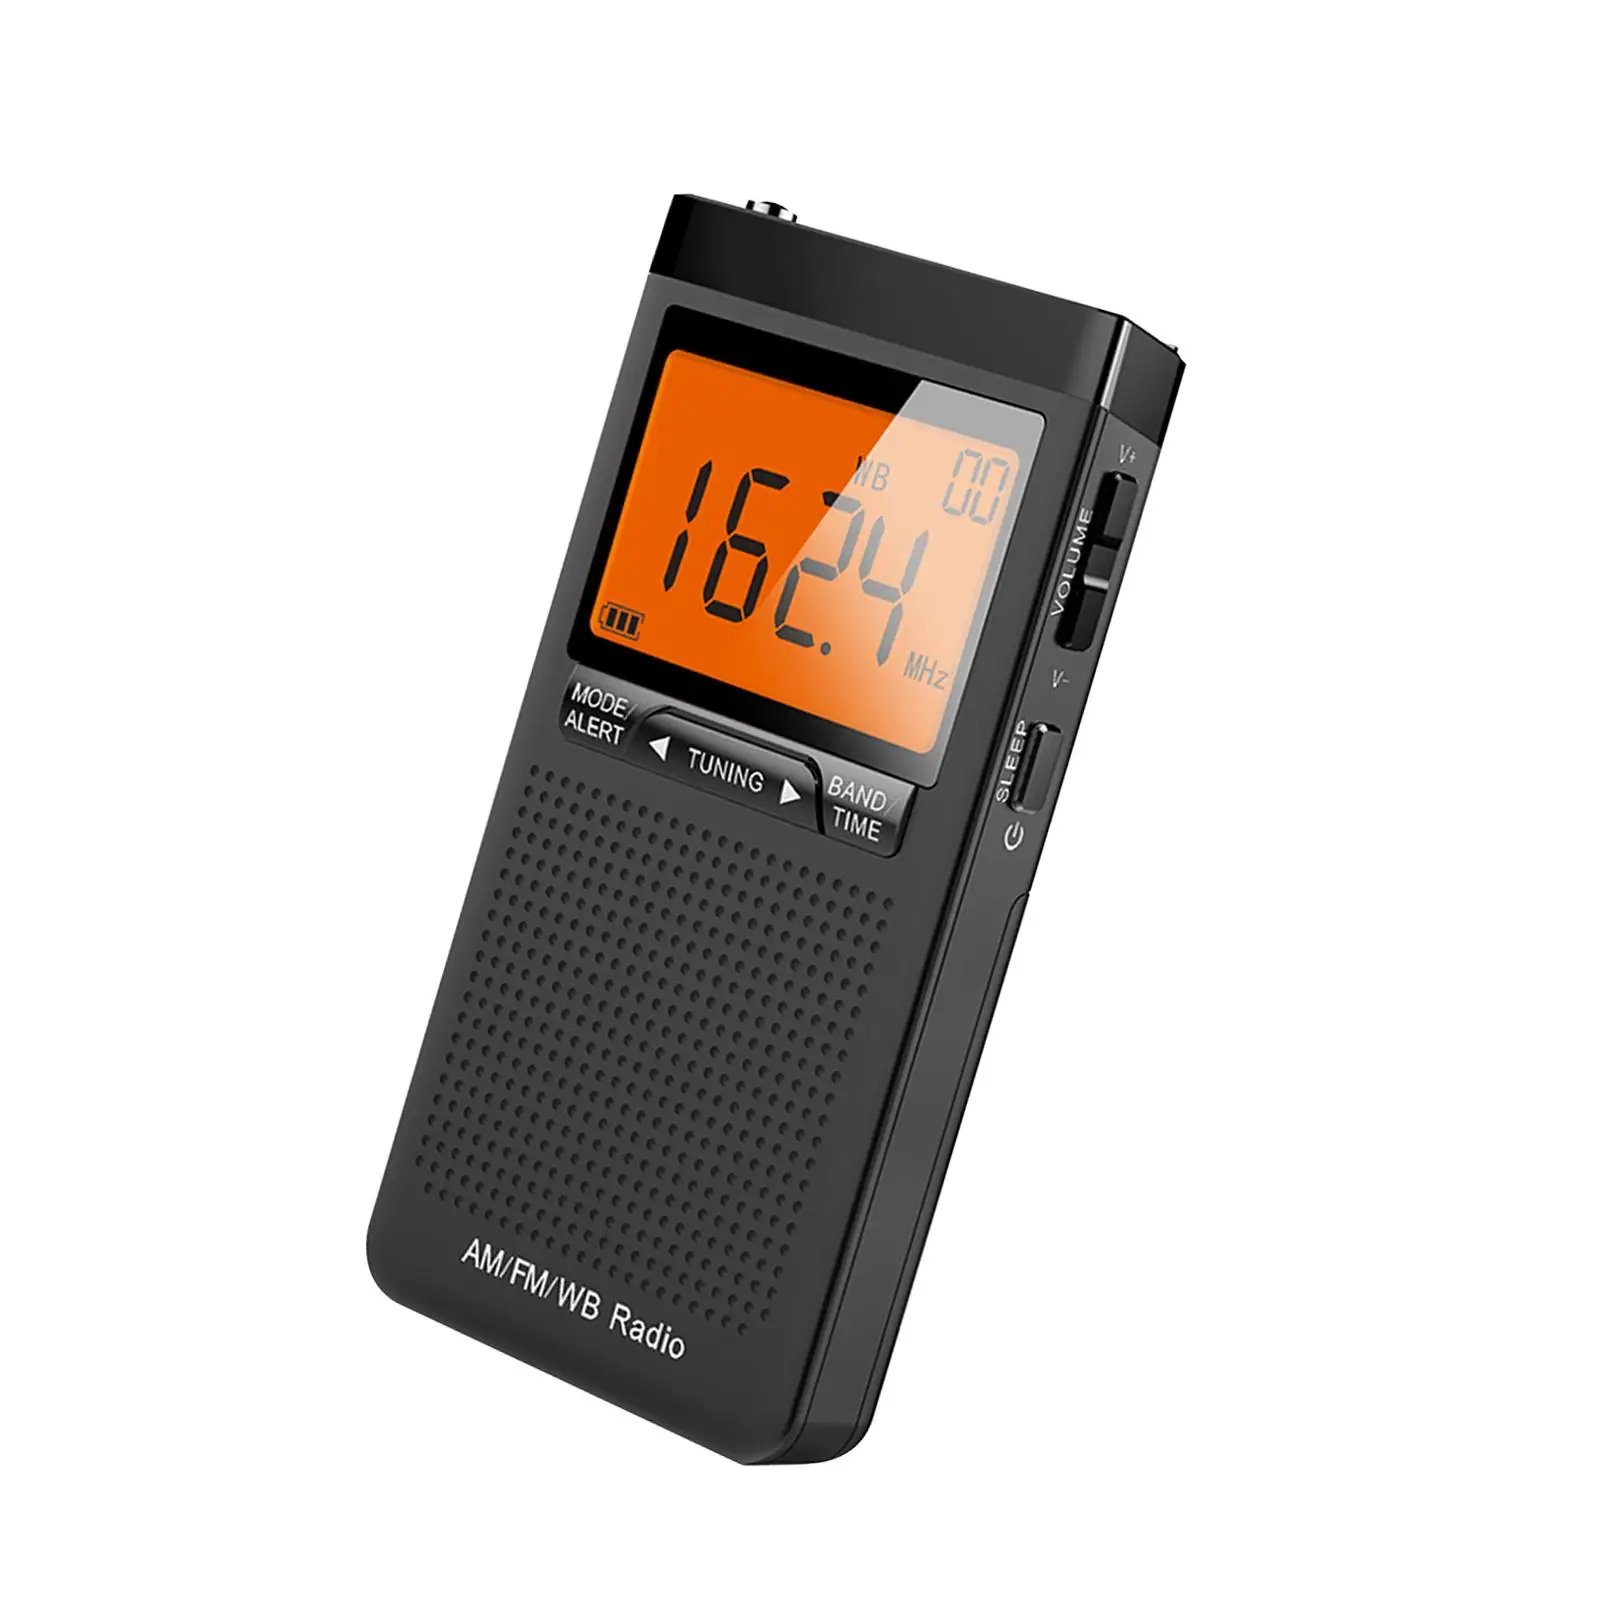 Portable Radio AM FM 3.5mm Headphone Jack Good Reception Personal Radio Alarm Clock for Camping Gym Indoor Outdoor Travel Walk